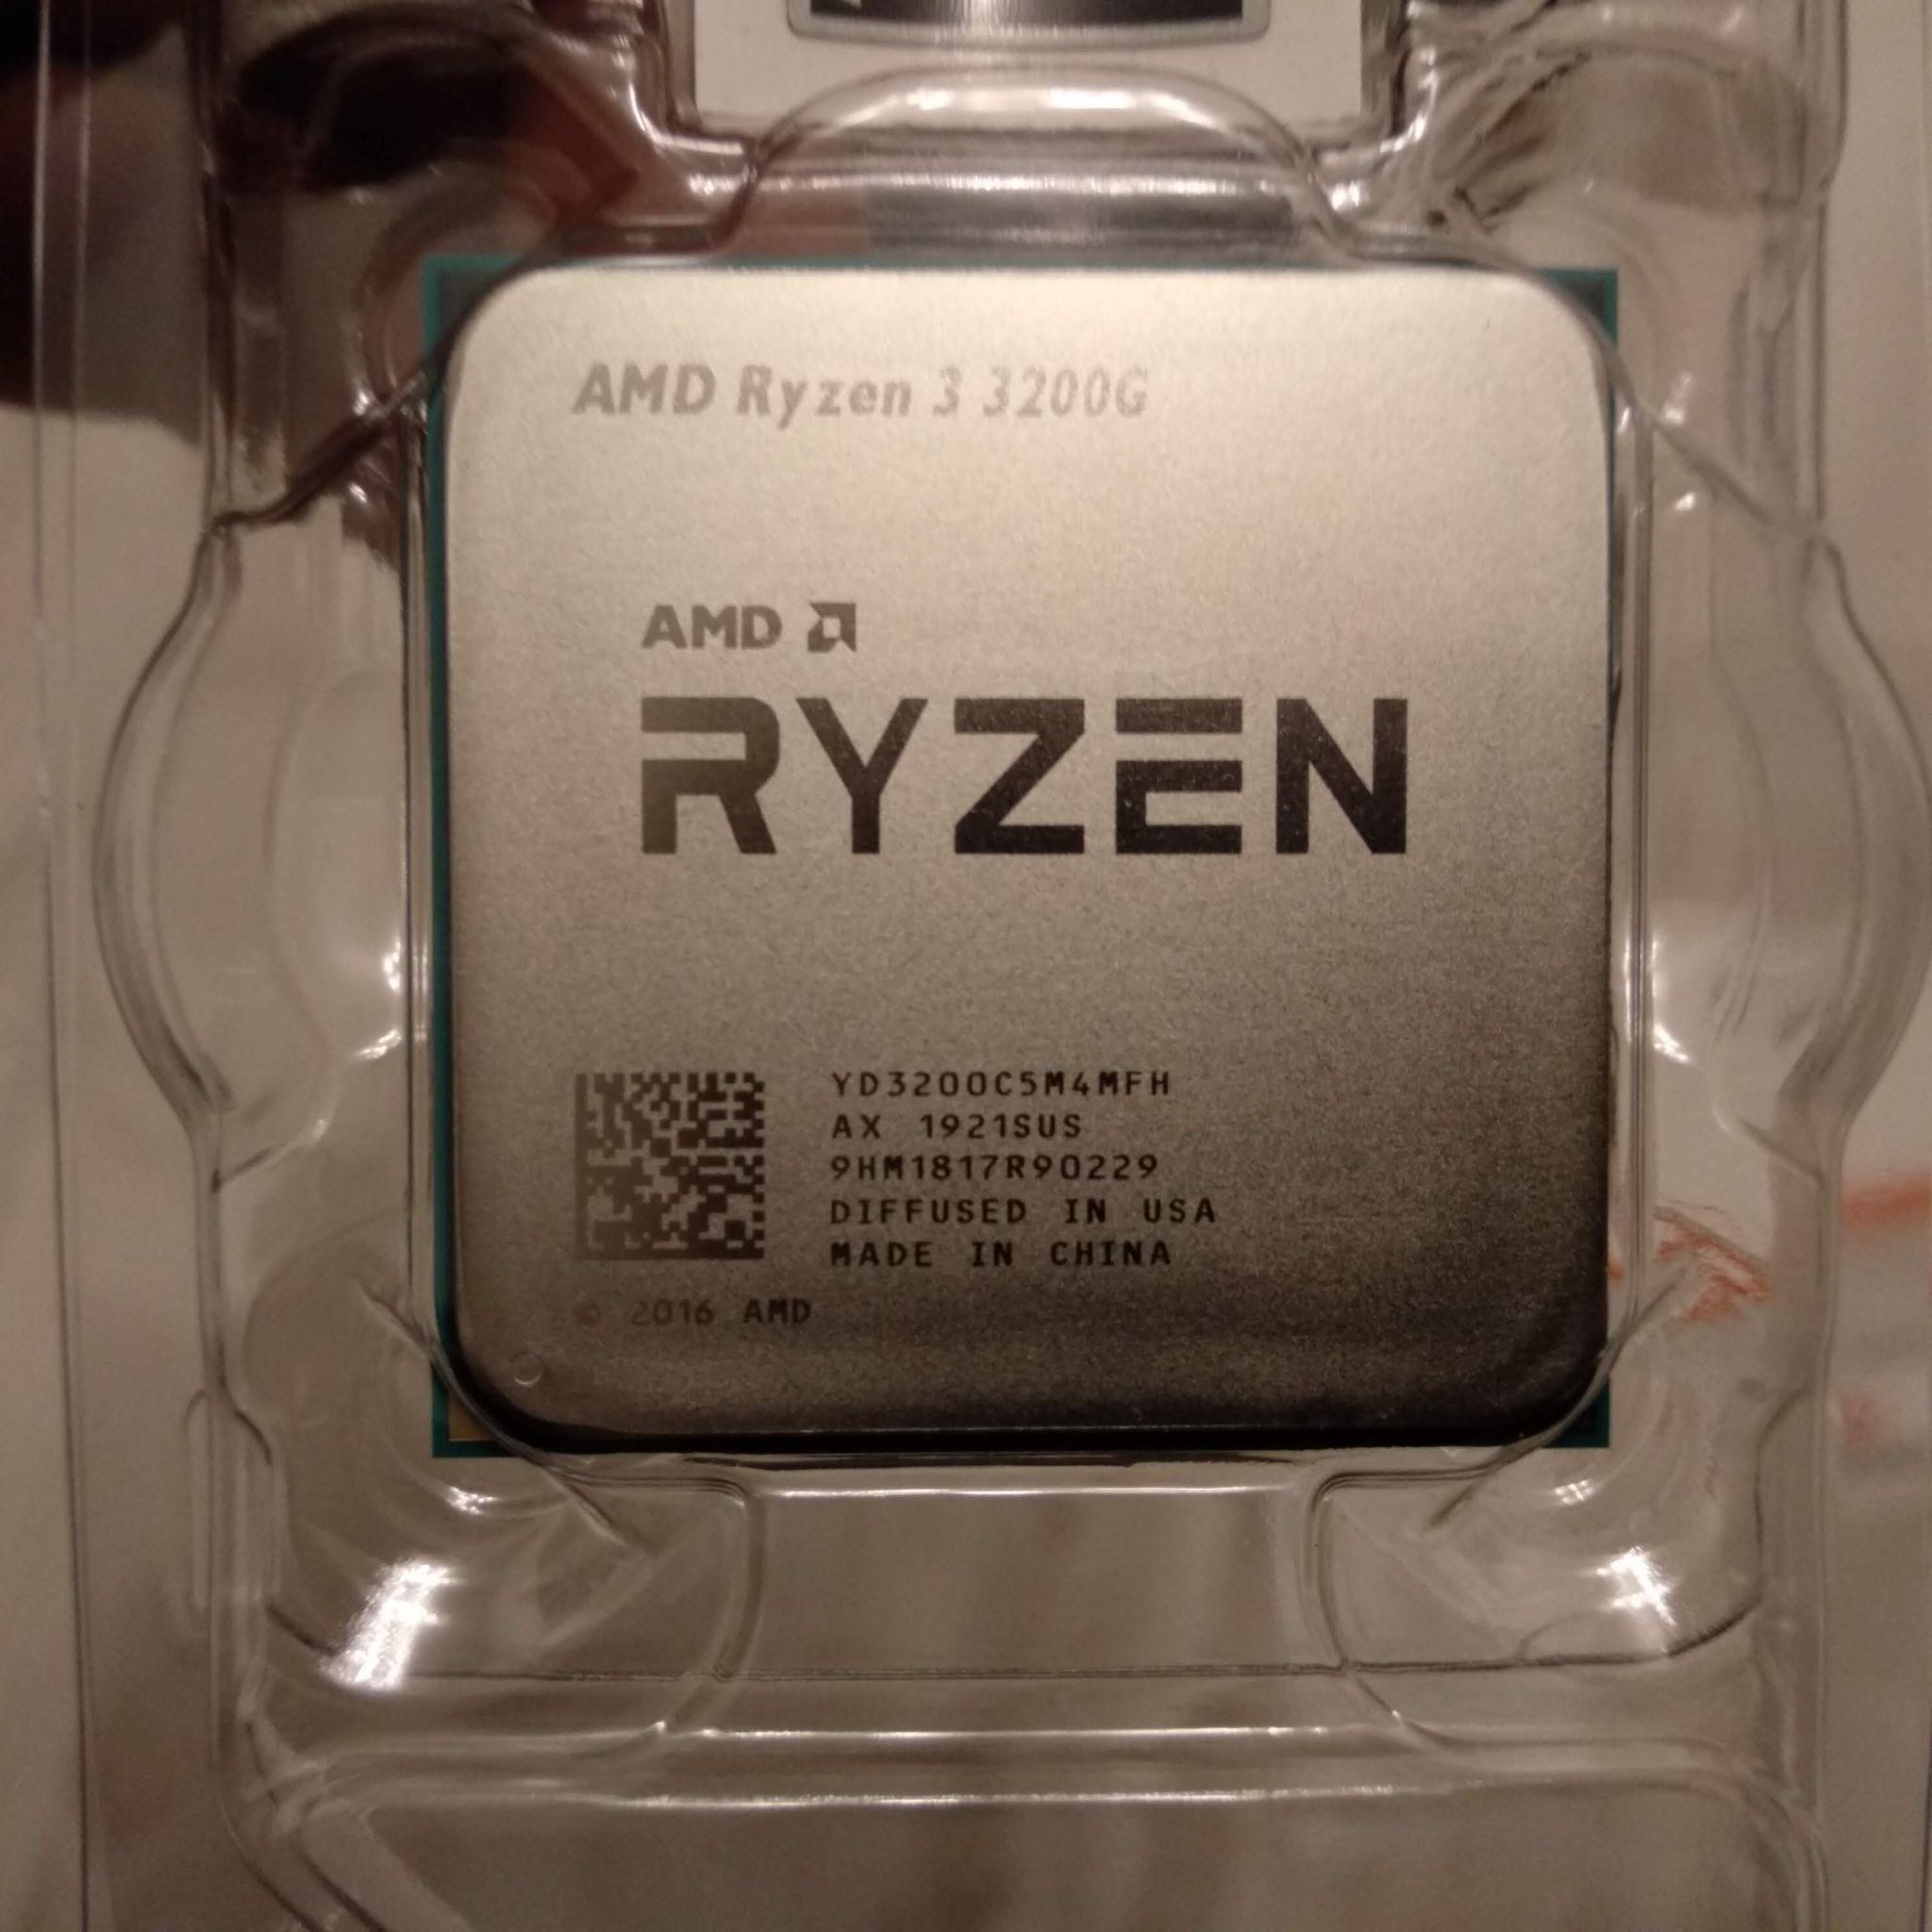 Amd ryzen 5600 g. AMD Ryzen 3 3200g. Процессор AMD Ryzen 3 3200g Box. Процессор AMD Ryzen 3 3200g am4. Процессор AMD Ryzen 5 5600x.